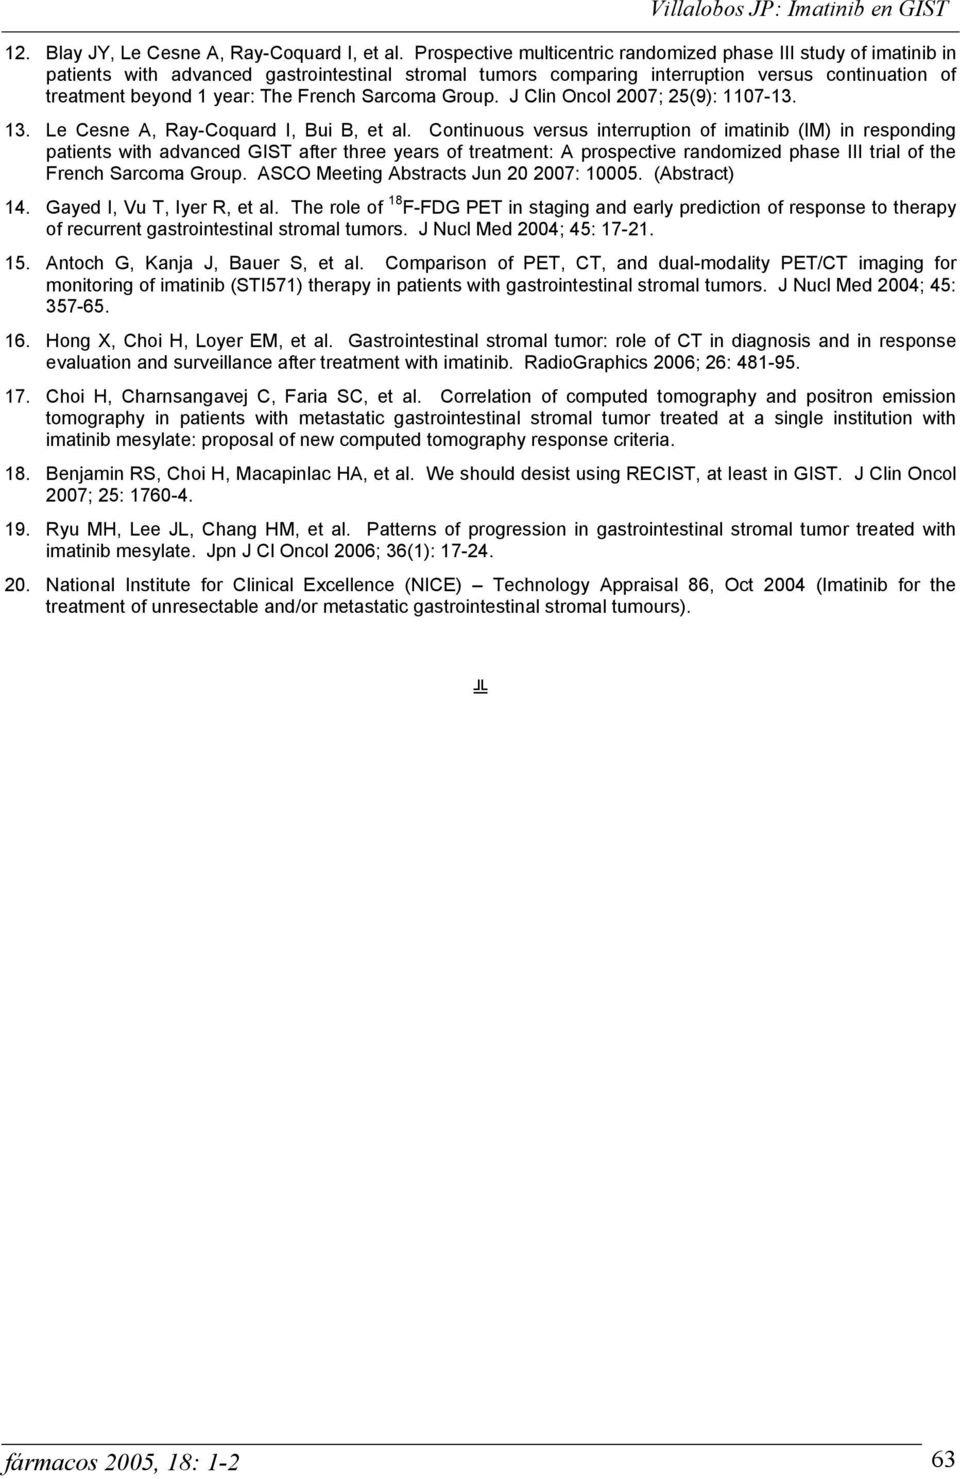 French Sarcoma Group. J Clin Oncol 2007; 25(9): 1107-13. 13. Le Cesne A, Ray-Coquard I, Bui B, et al.